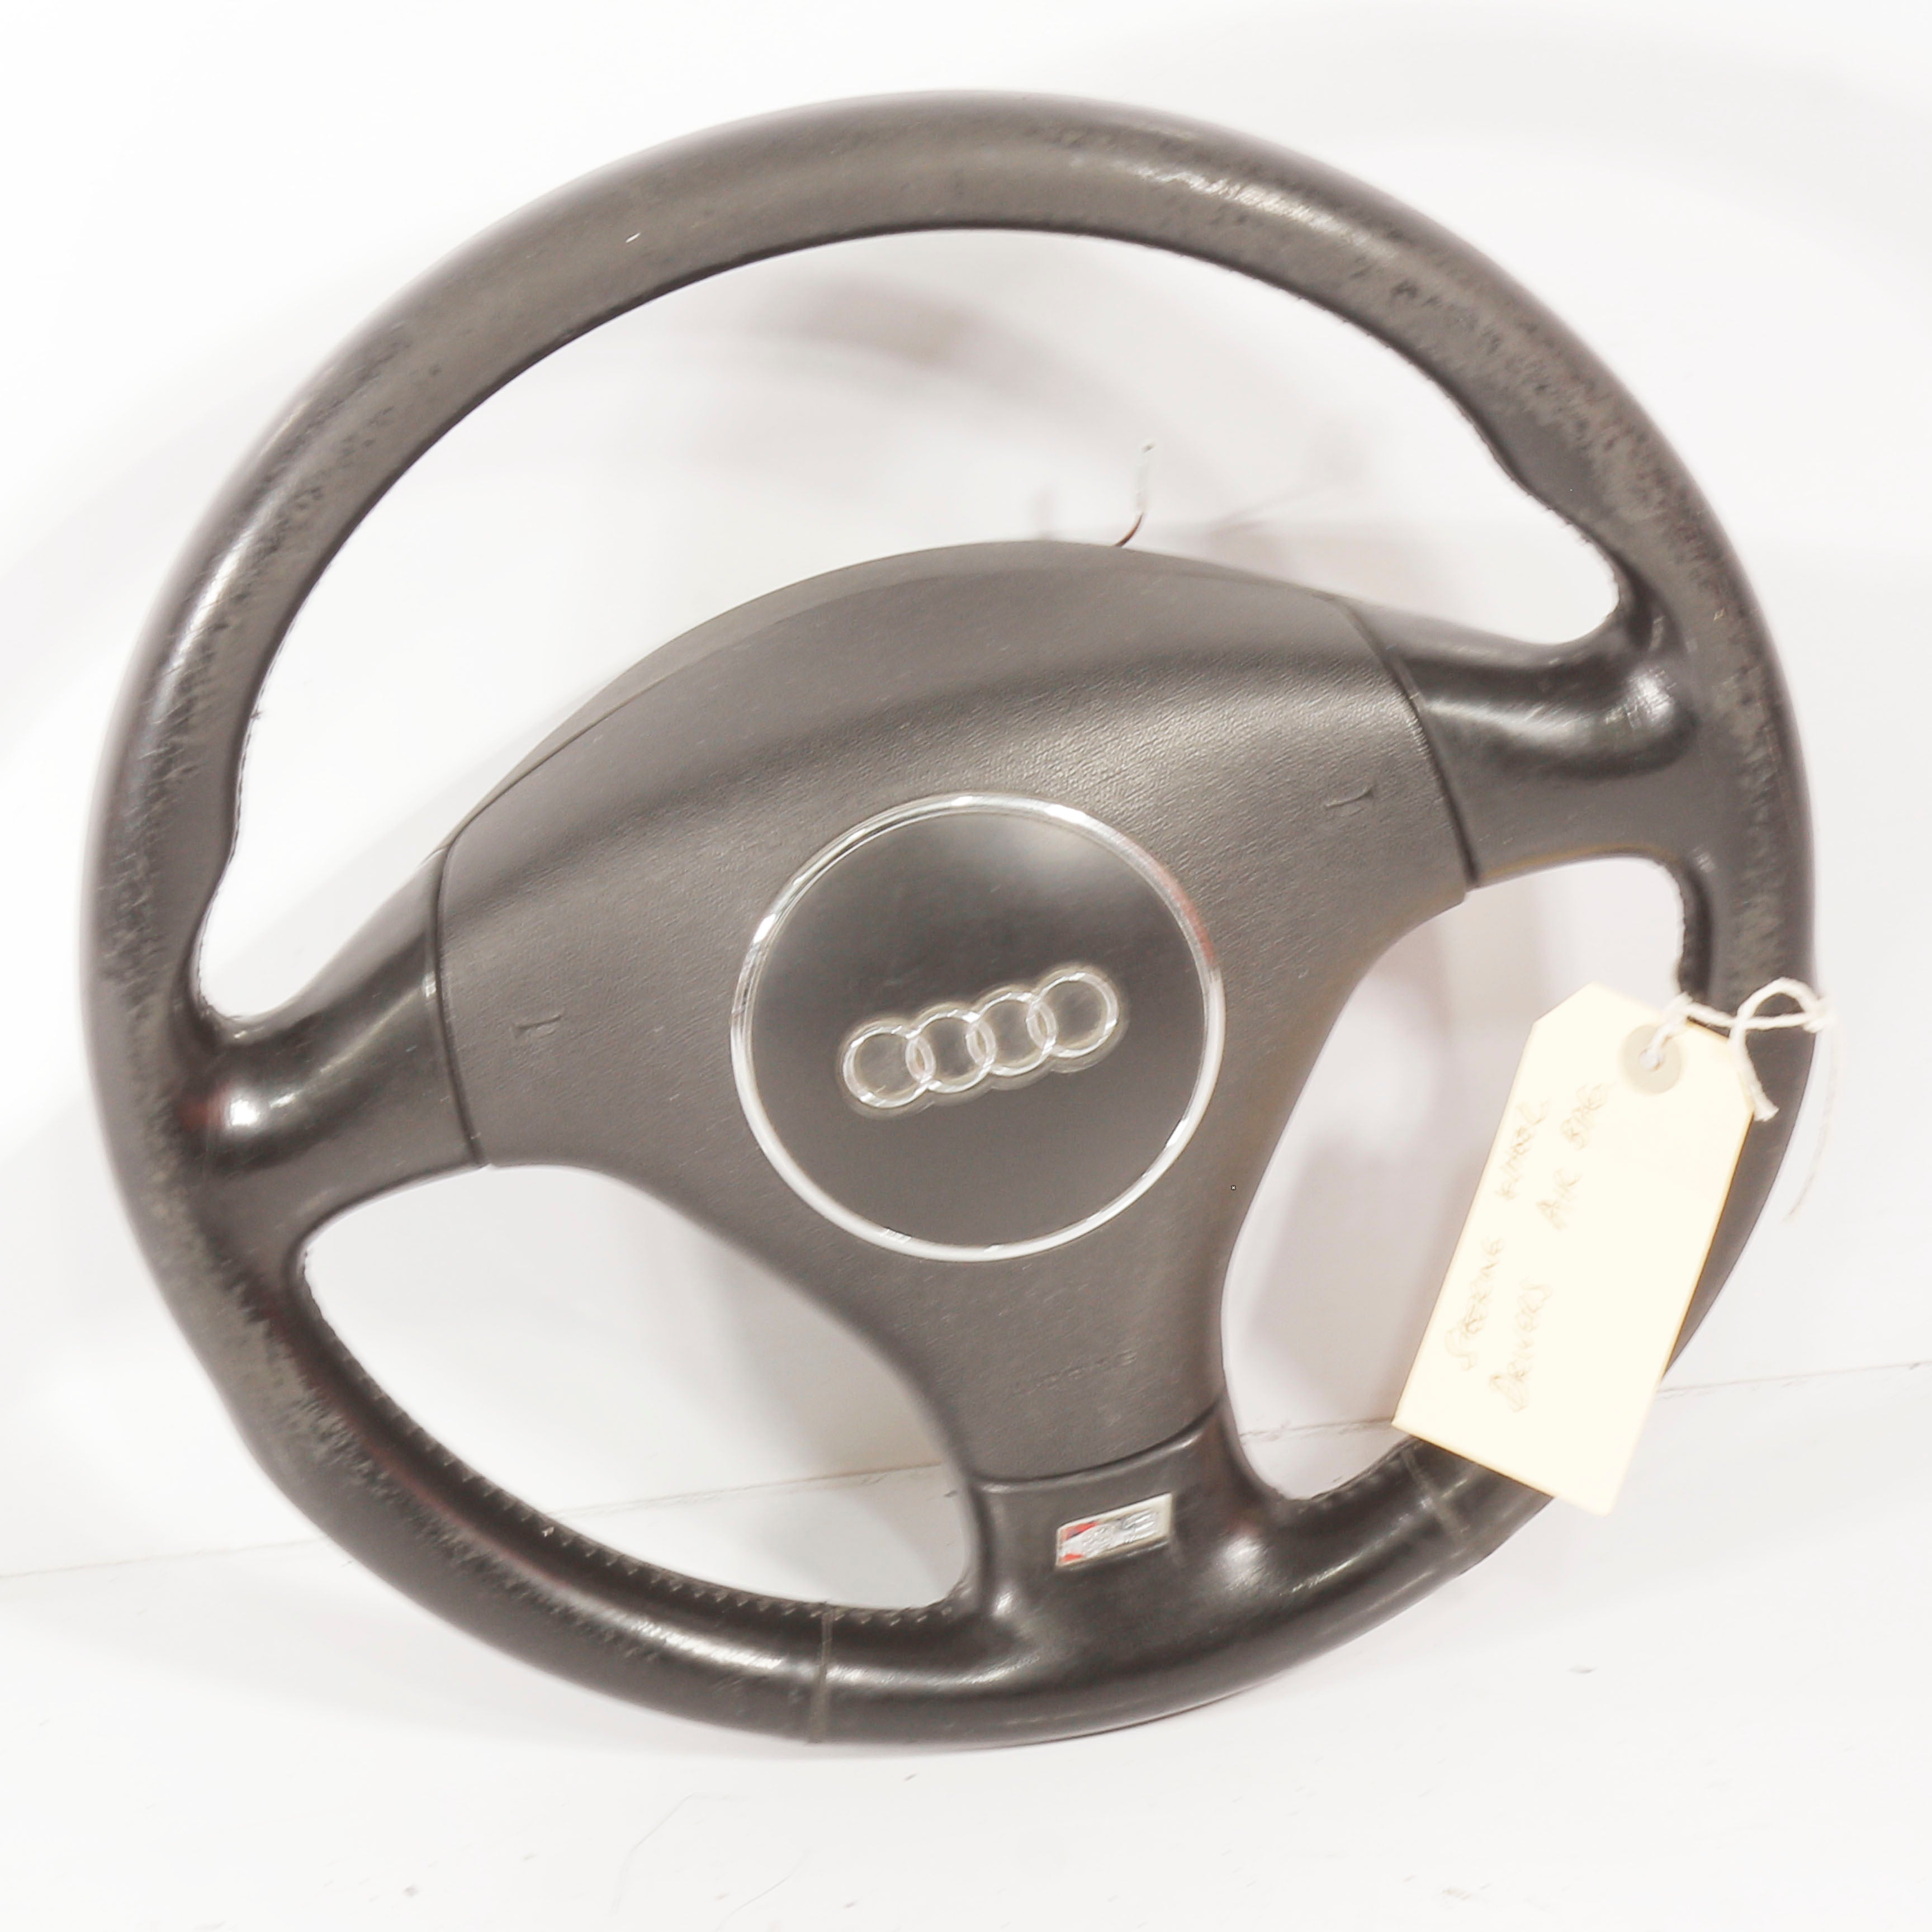 Audi S3 (Facelift) 8L 1.8T Steering Wheel + Driver's Air Bag